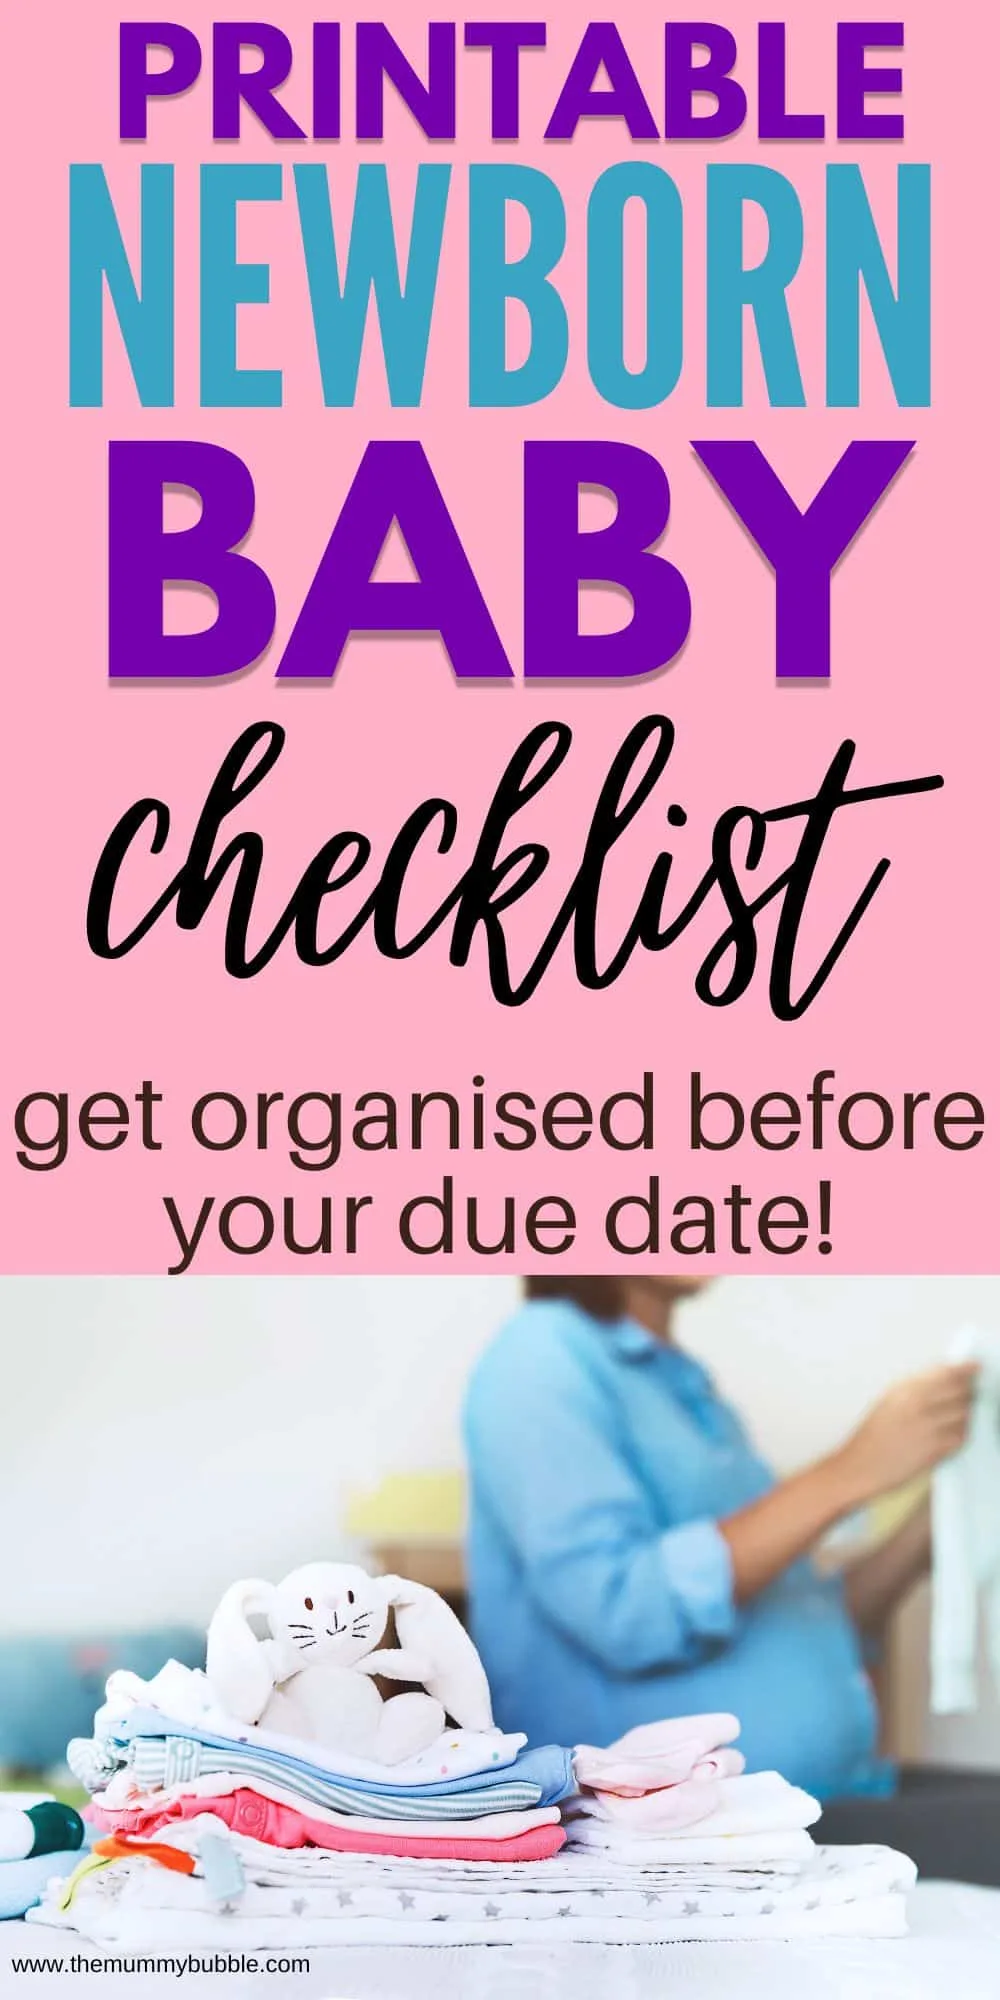 New Baby Checklist - Printable Newborn Checklist and Baby Checklist